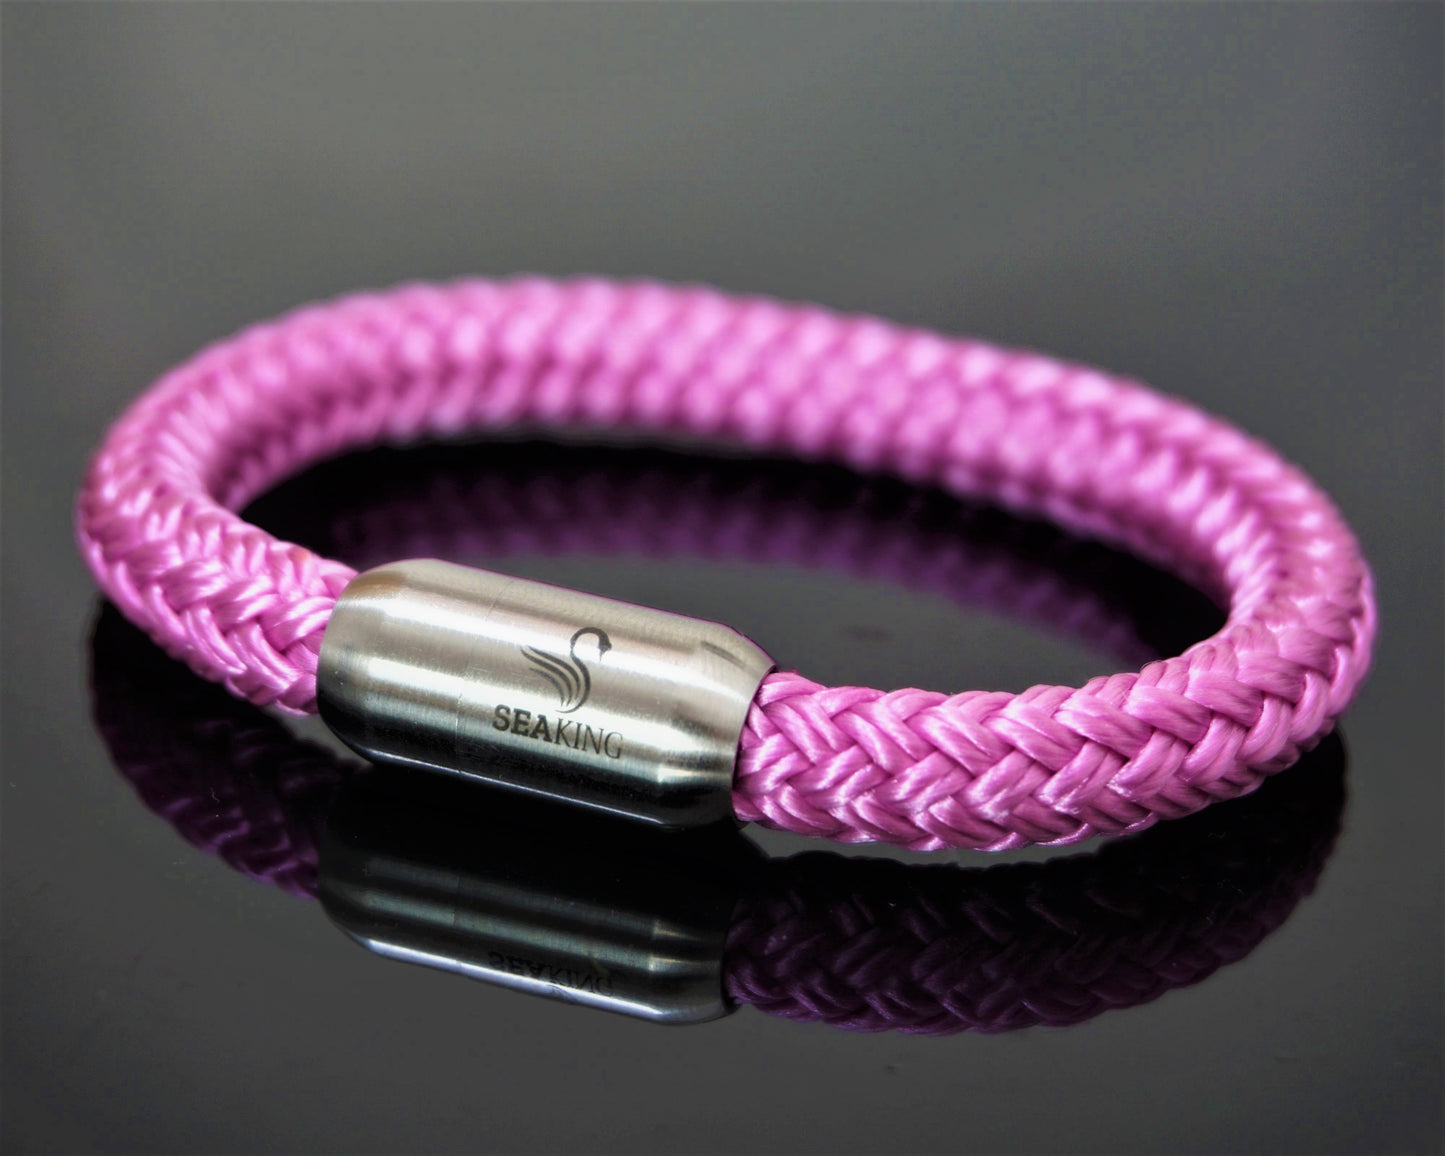 Wörthersee - Basic Farben - Sea King Bracelets